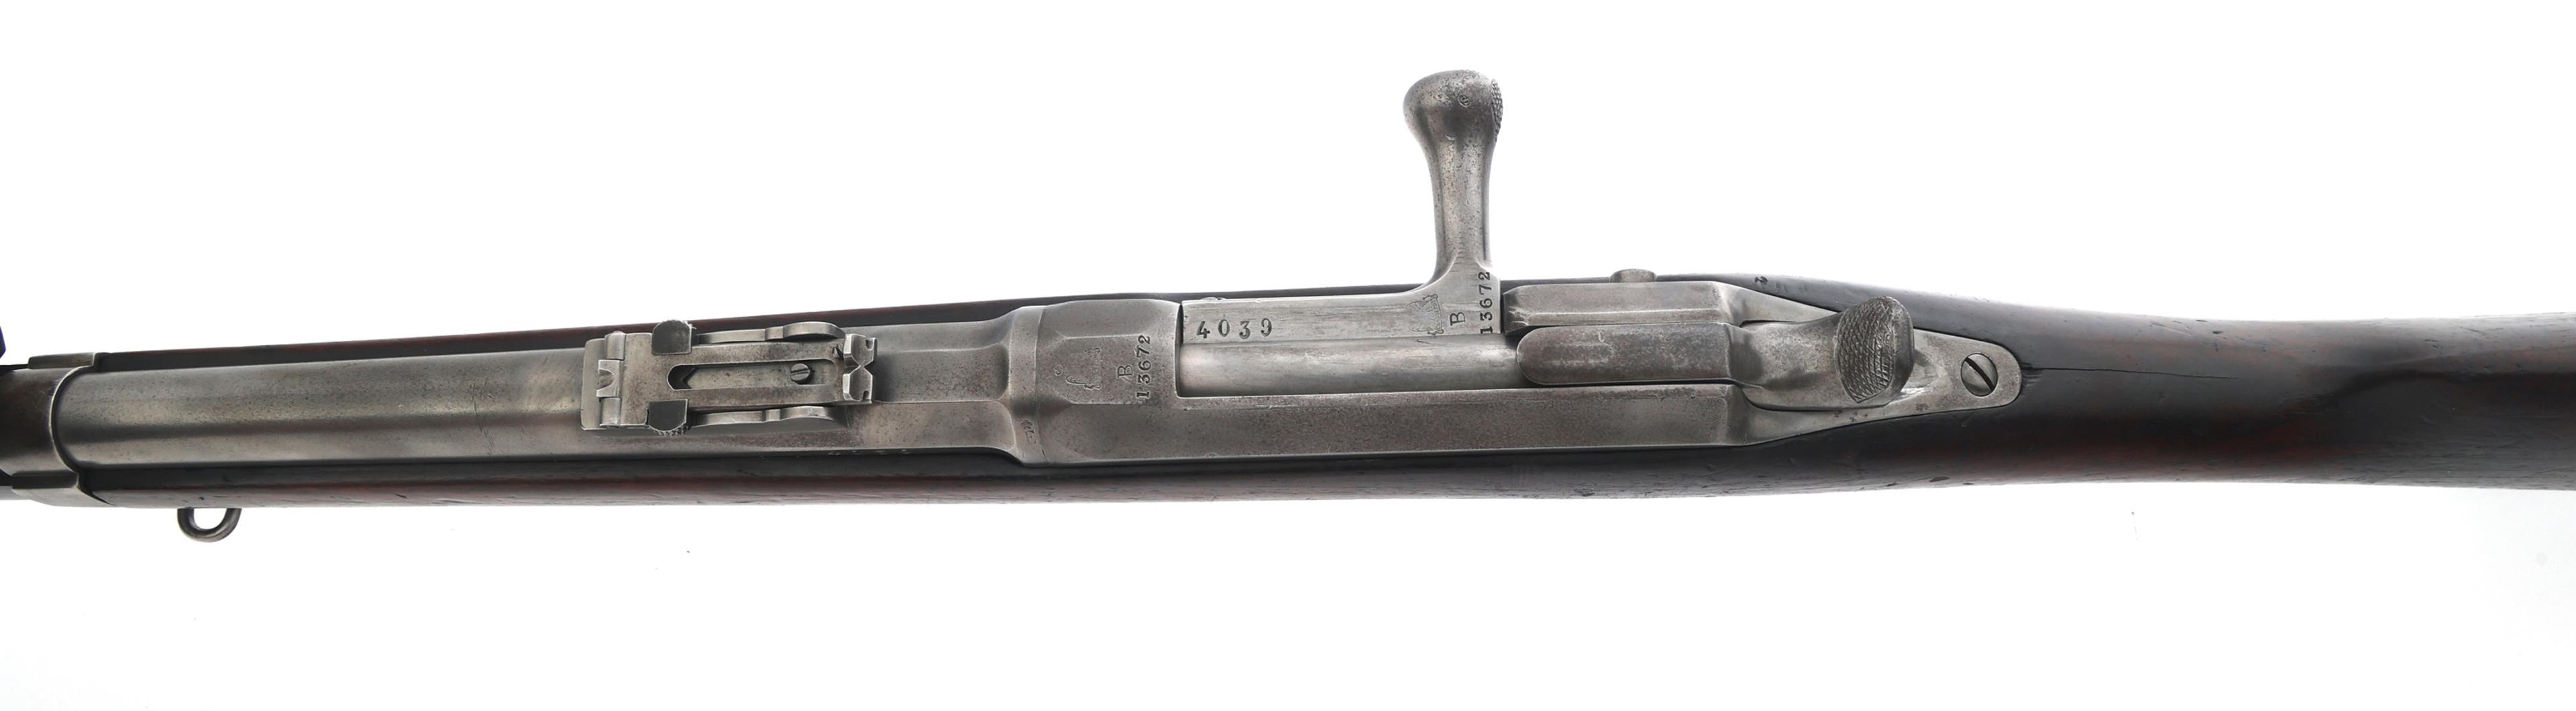 BRITISH MODEL 1866 11mm CALIBER CHASSEPOT RIFLE